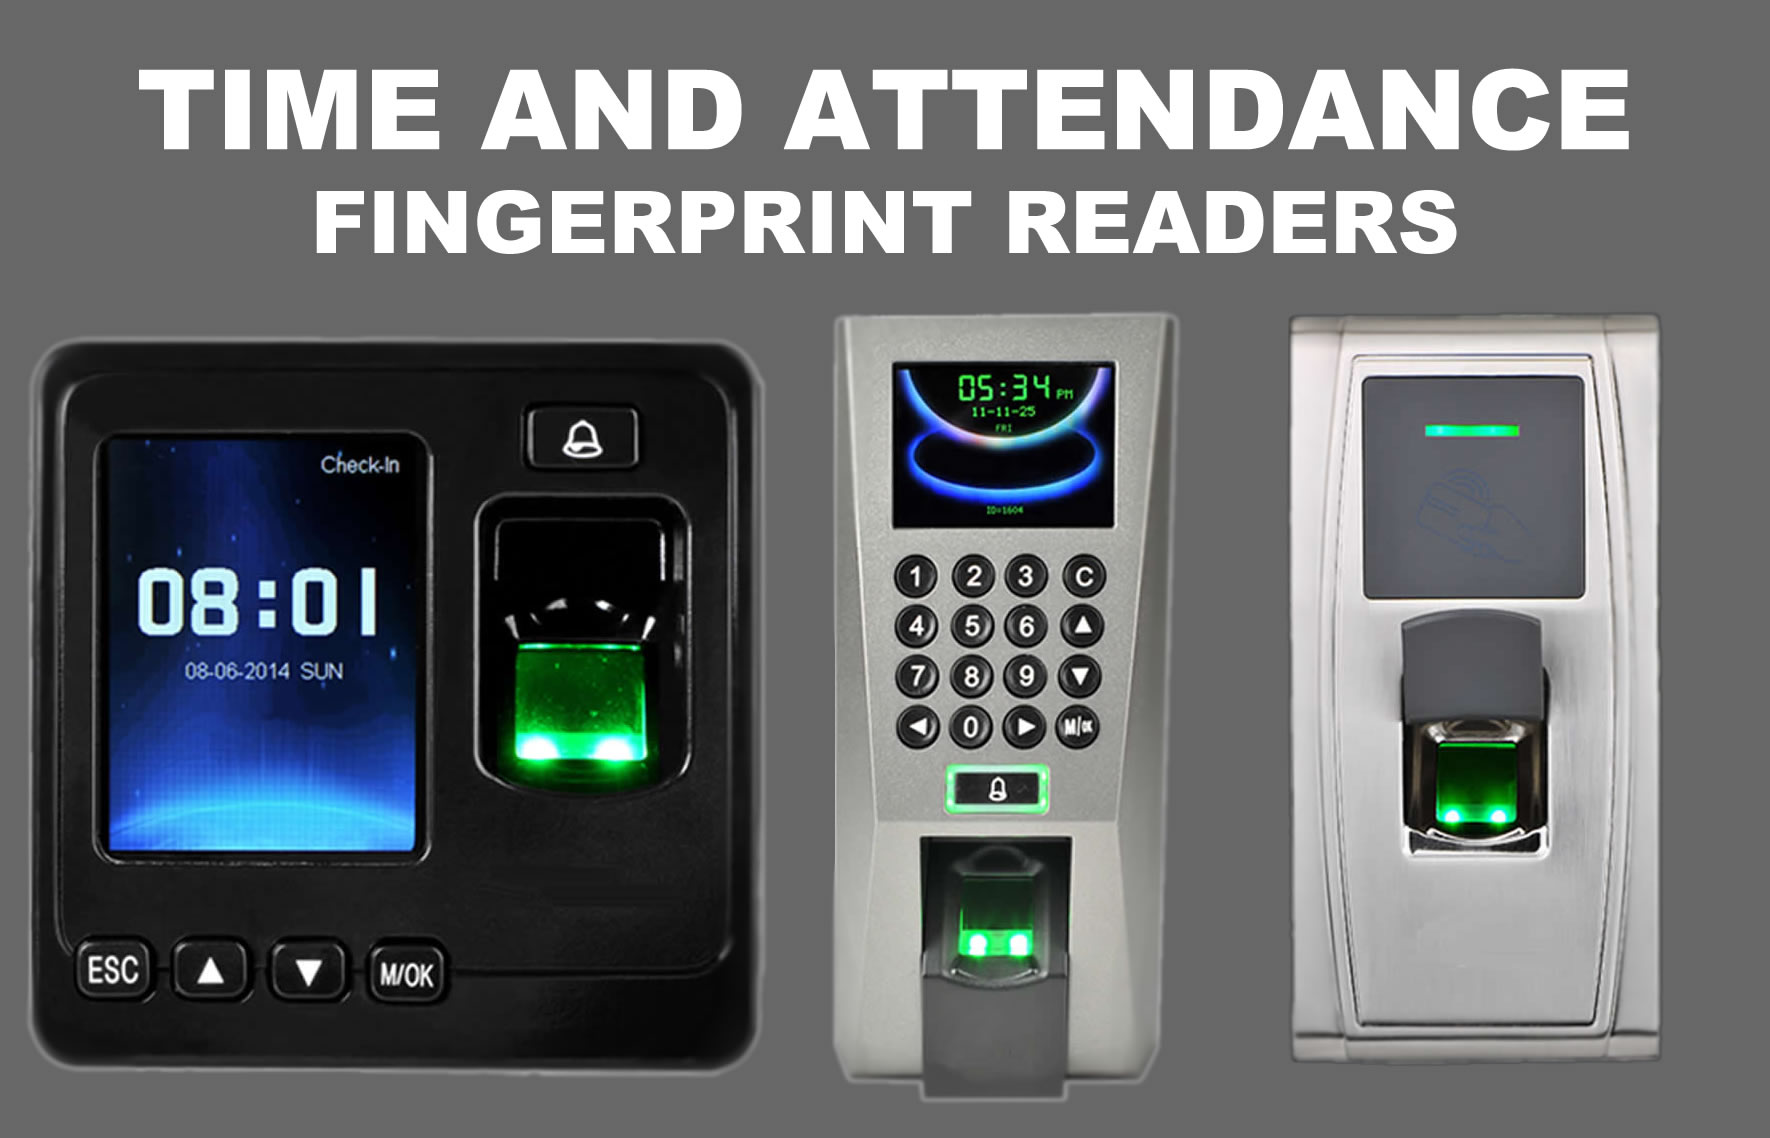 fingerprint readers - time and attendance